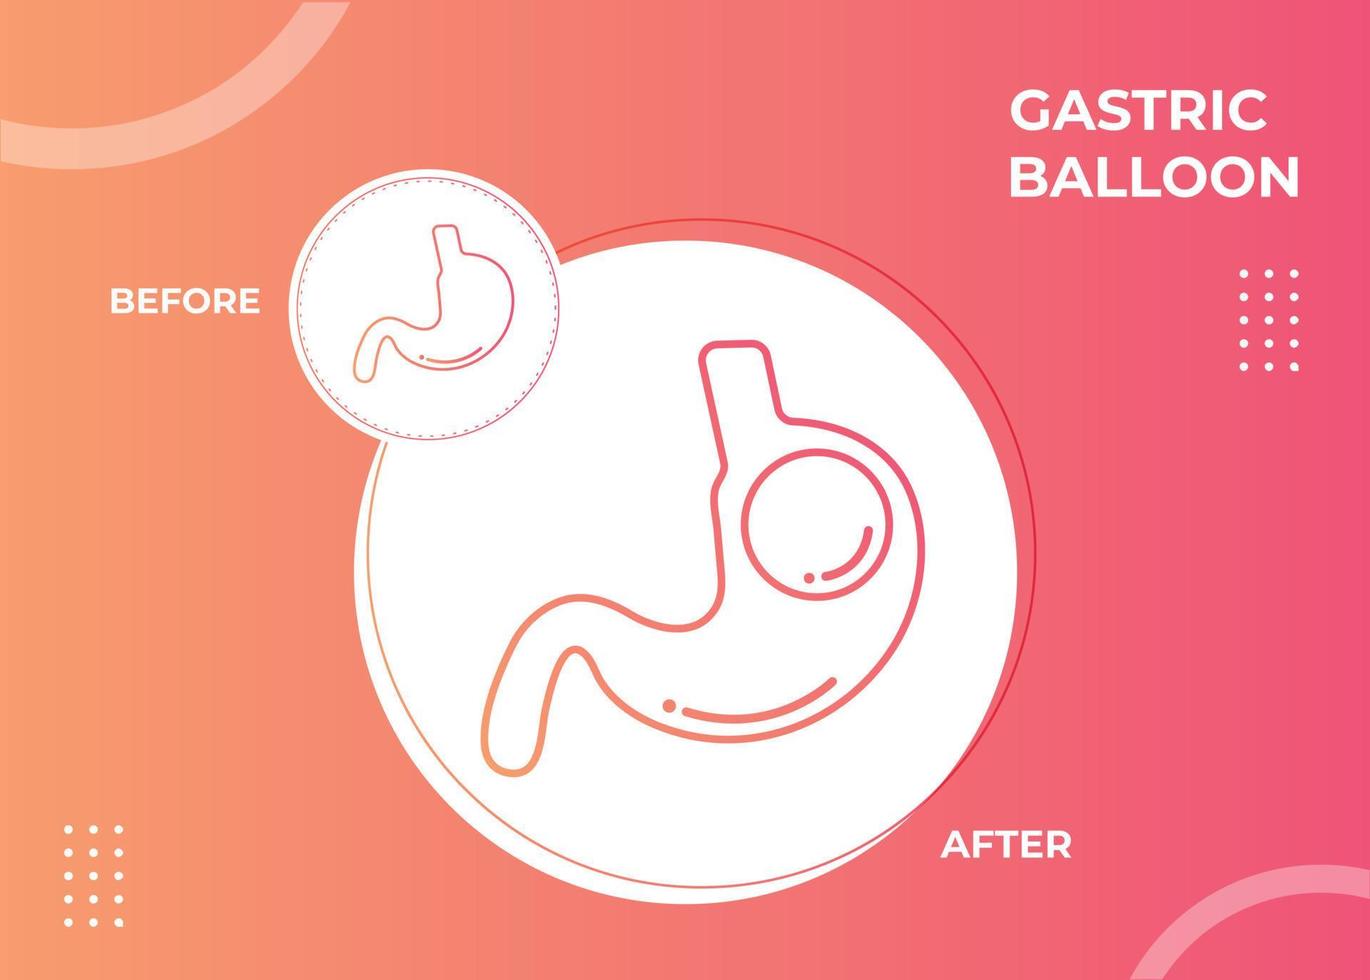 endoscopia estomacal balón gástrico dentro de un estómago cirugía de pérdida de peso ilustración vectorial obesidad vector